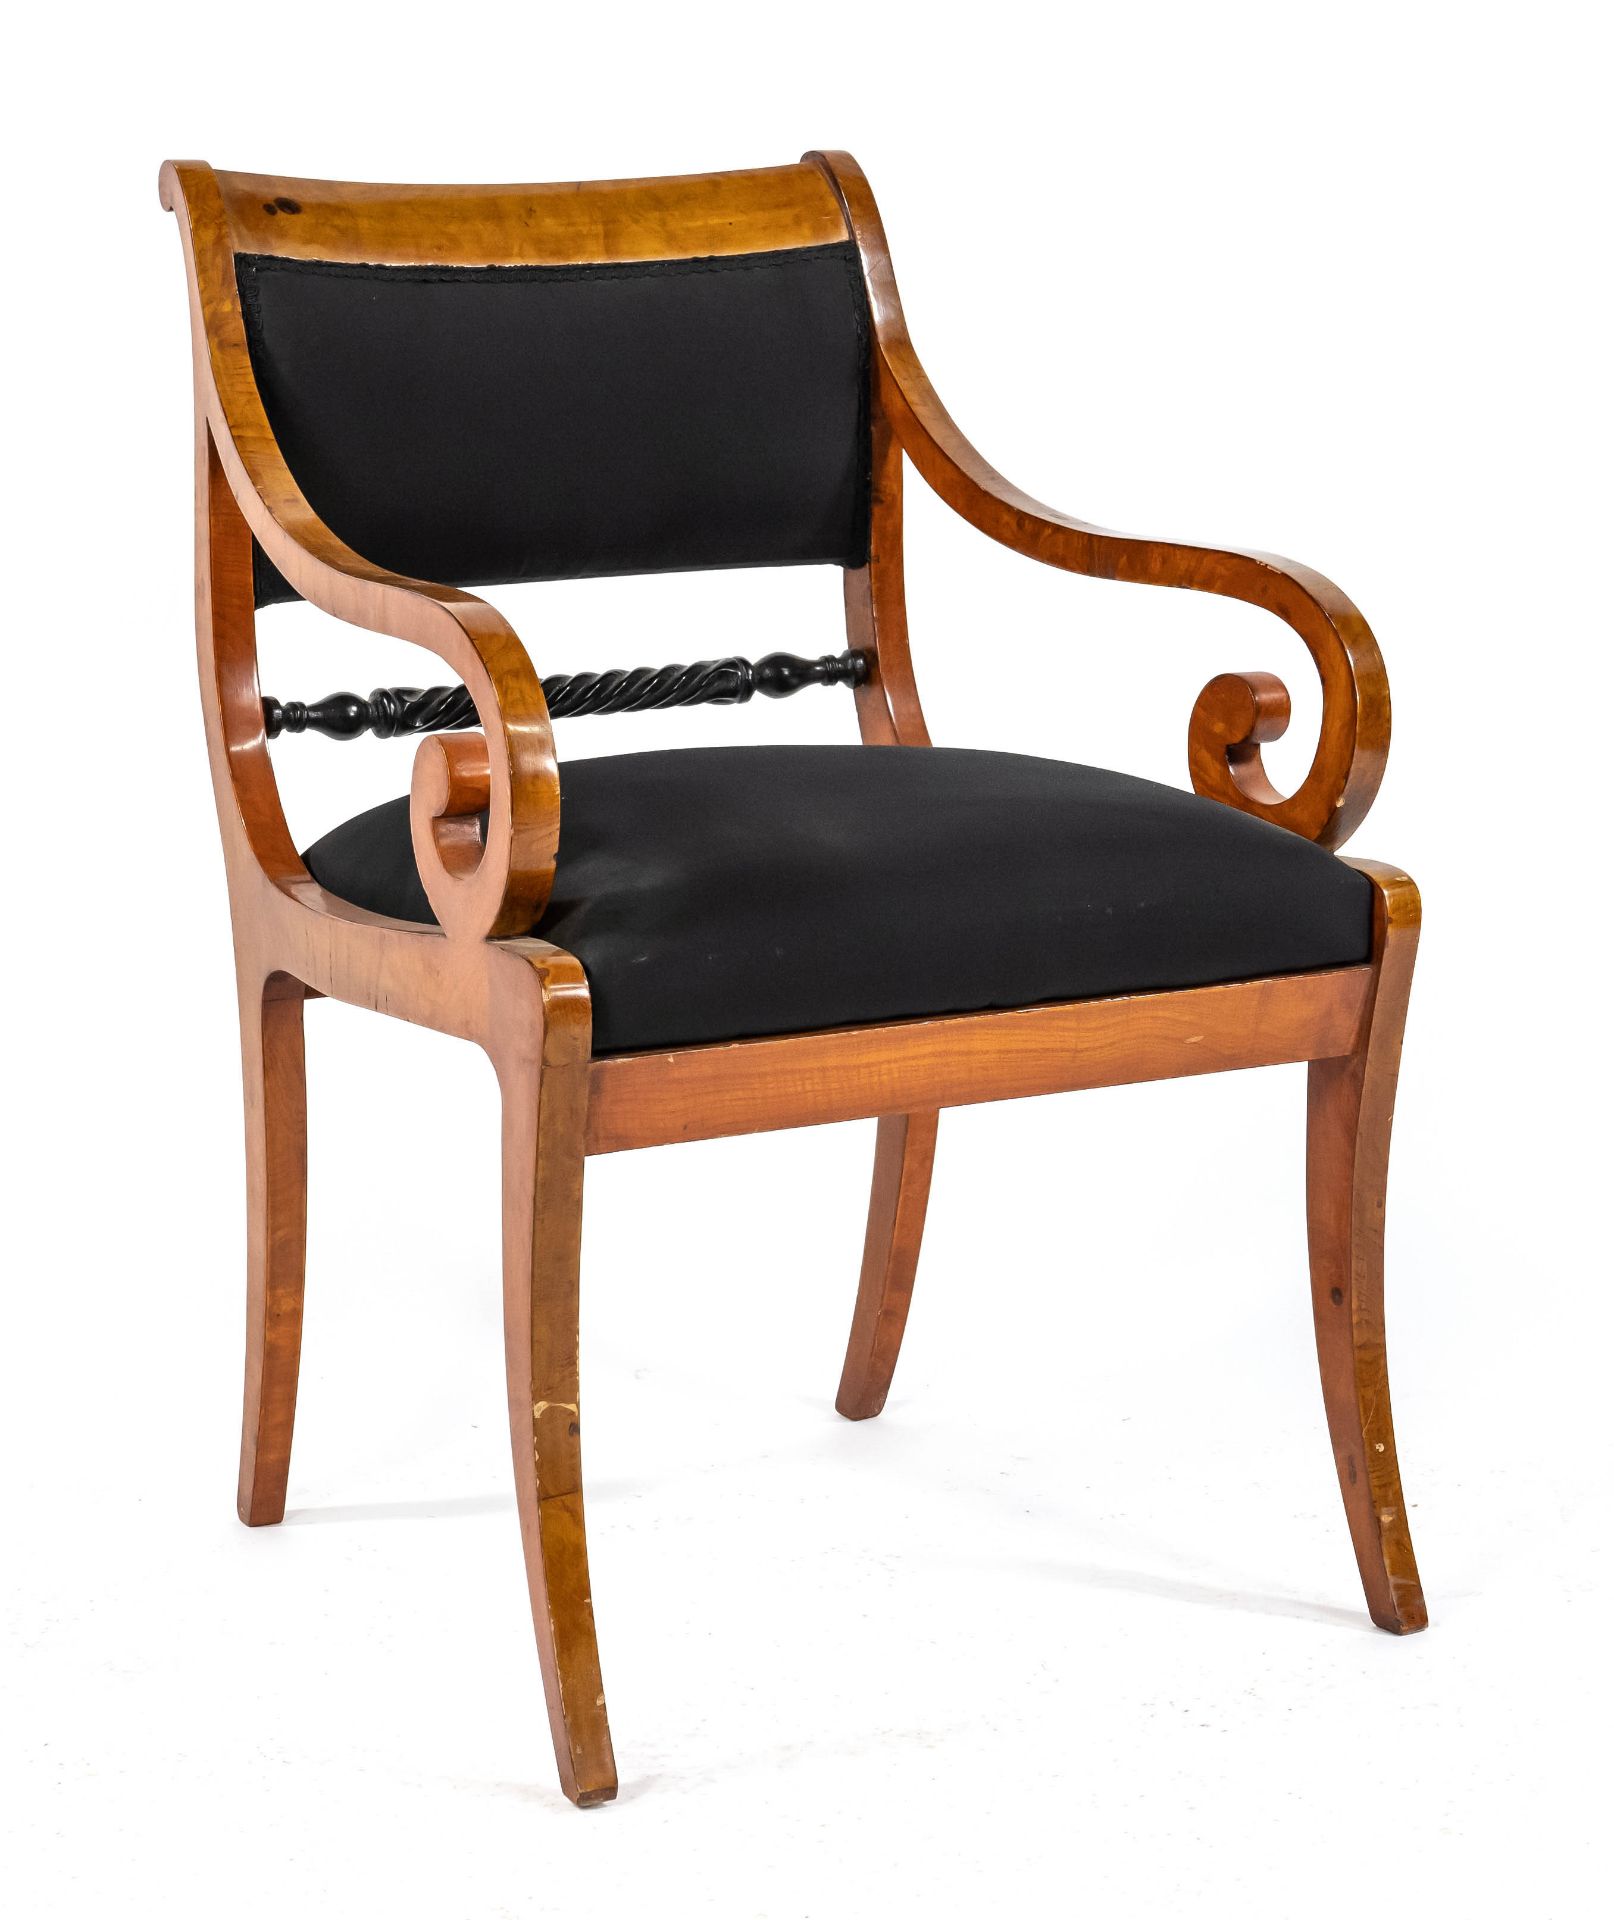 Biedermeier style armchair, mid-20th century, maple veneered and solid, volute-shaped armrests, 85 x